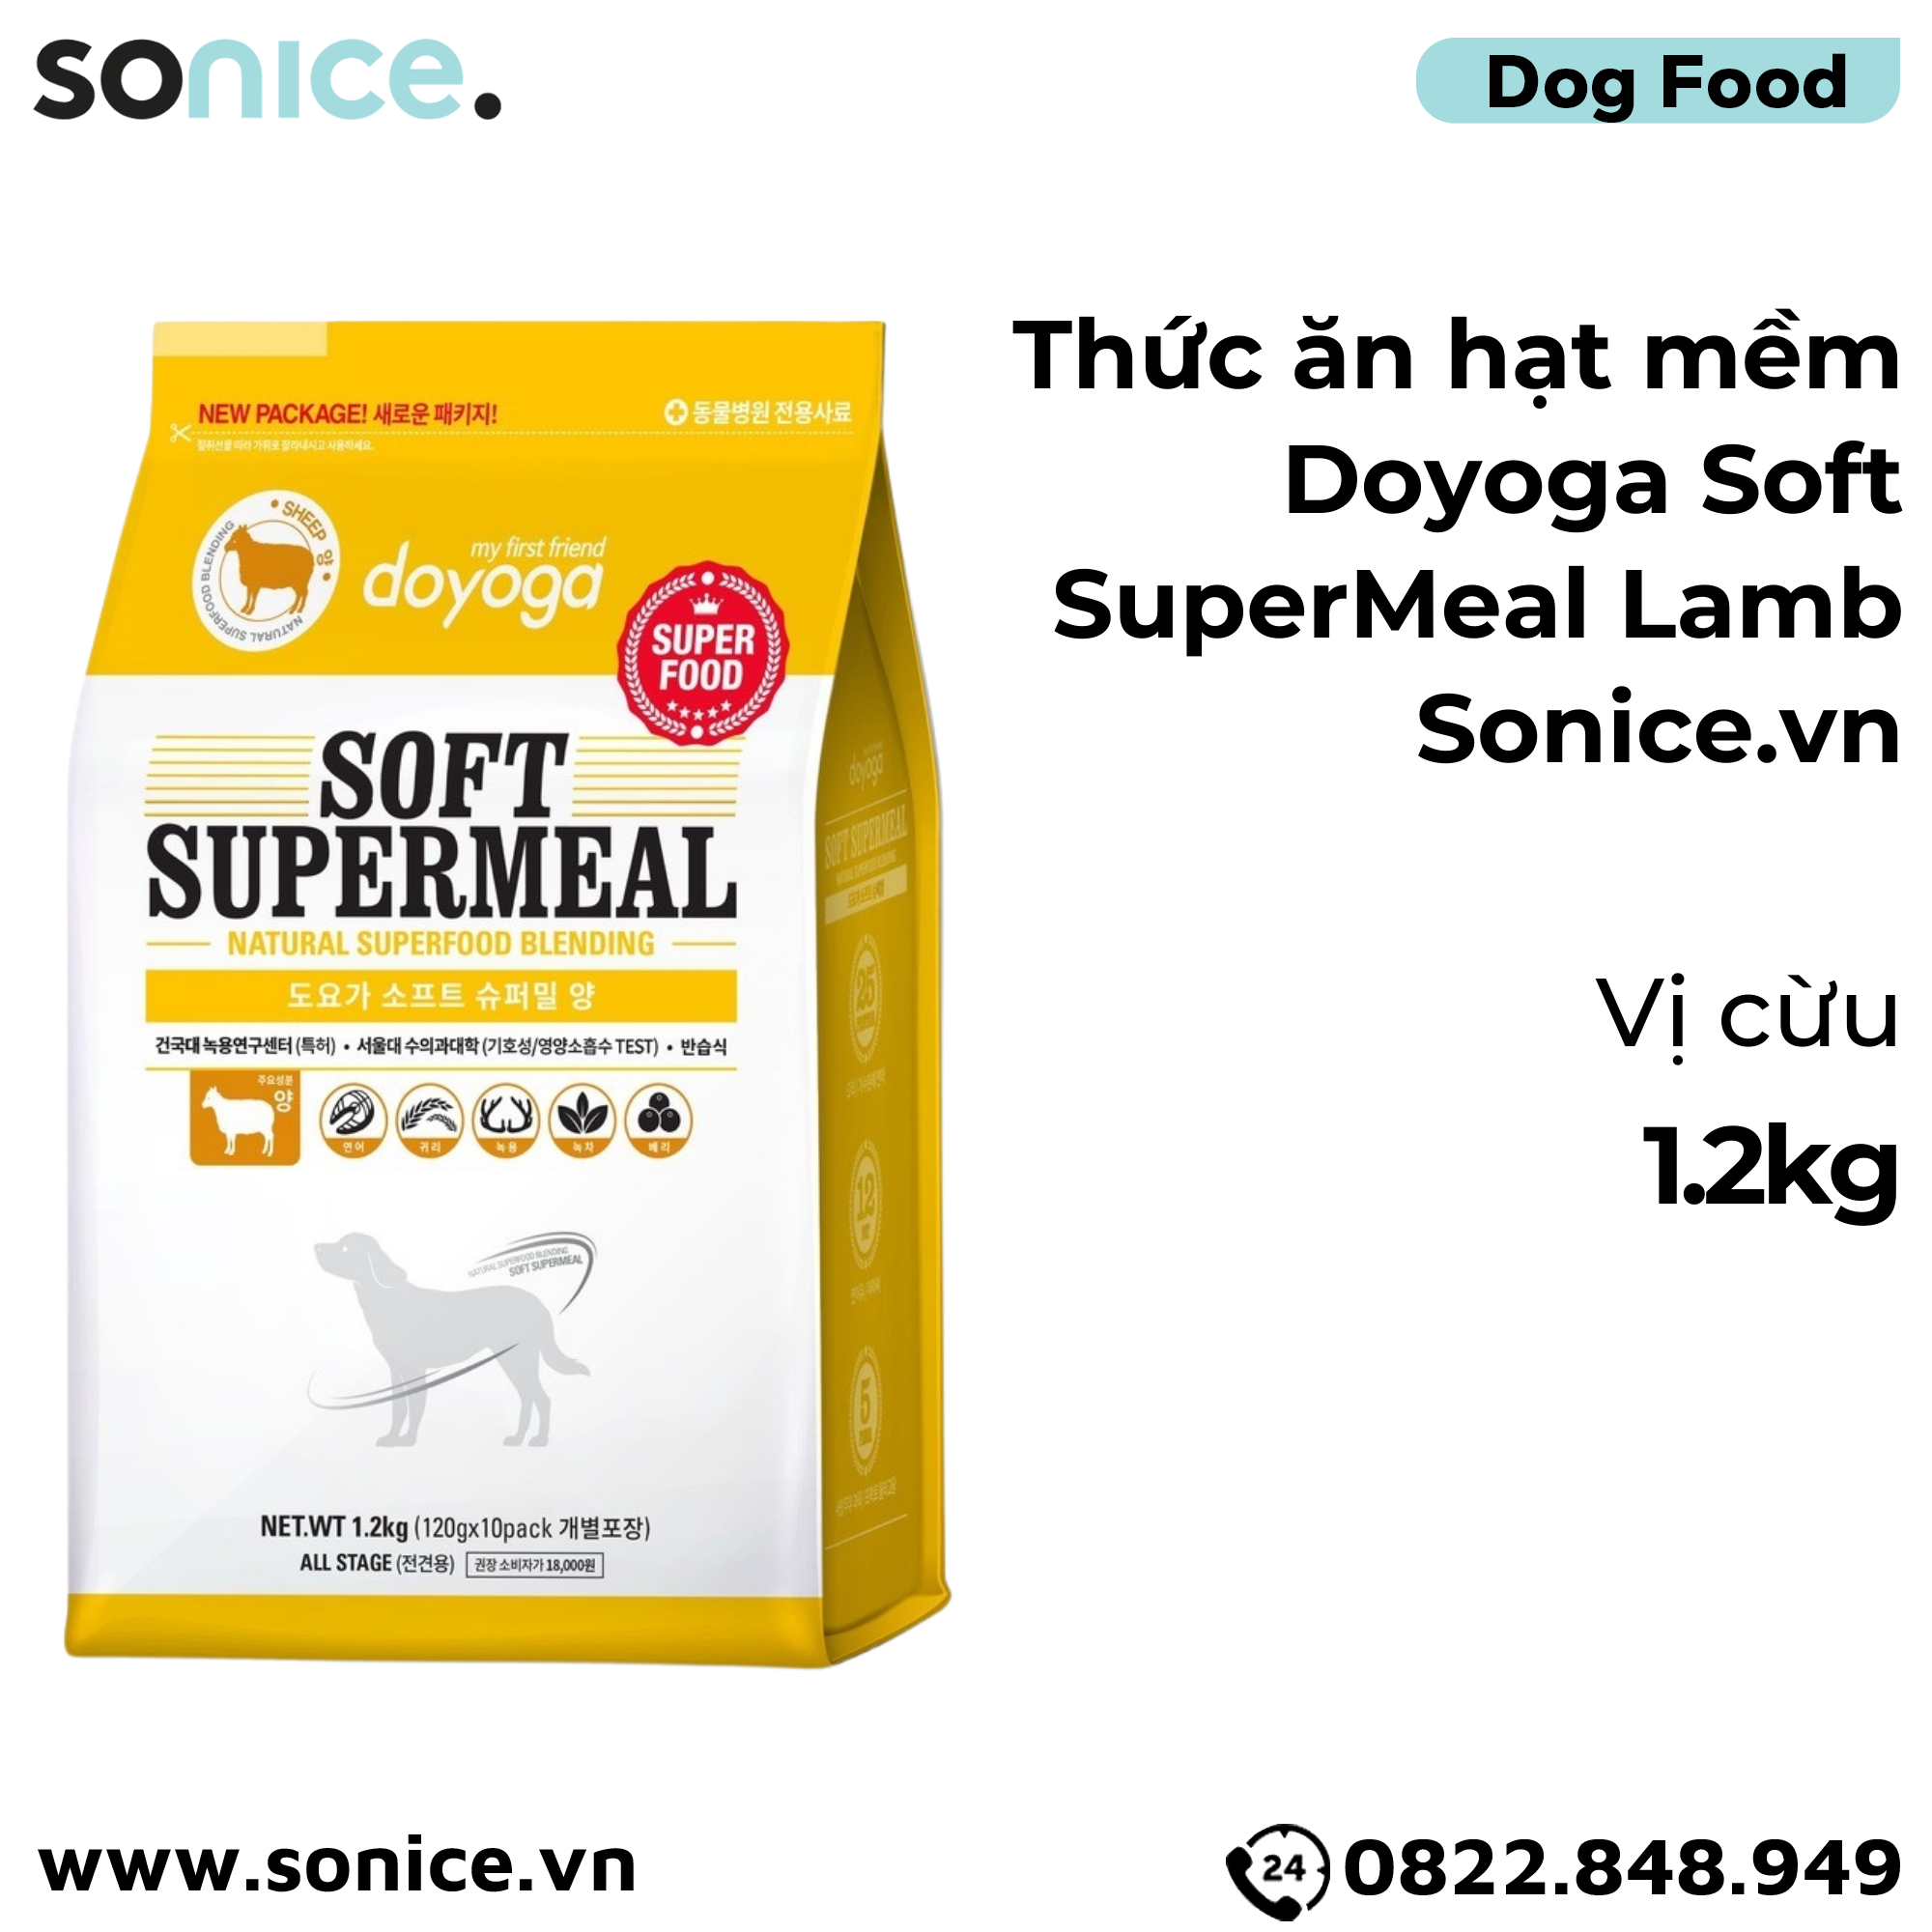  Thức ăn hạt mềm Doyoga Soft SuperMeal Lamb 1.2kg - vị cừu SONICE. 